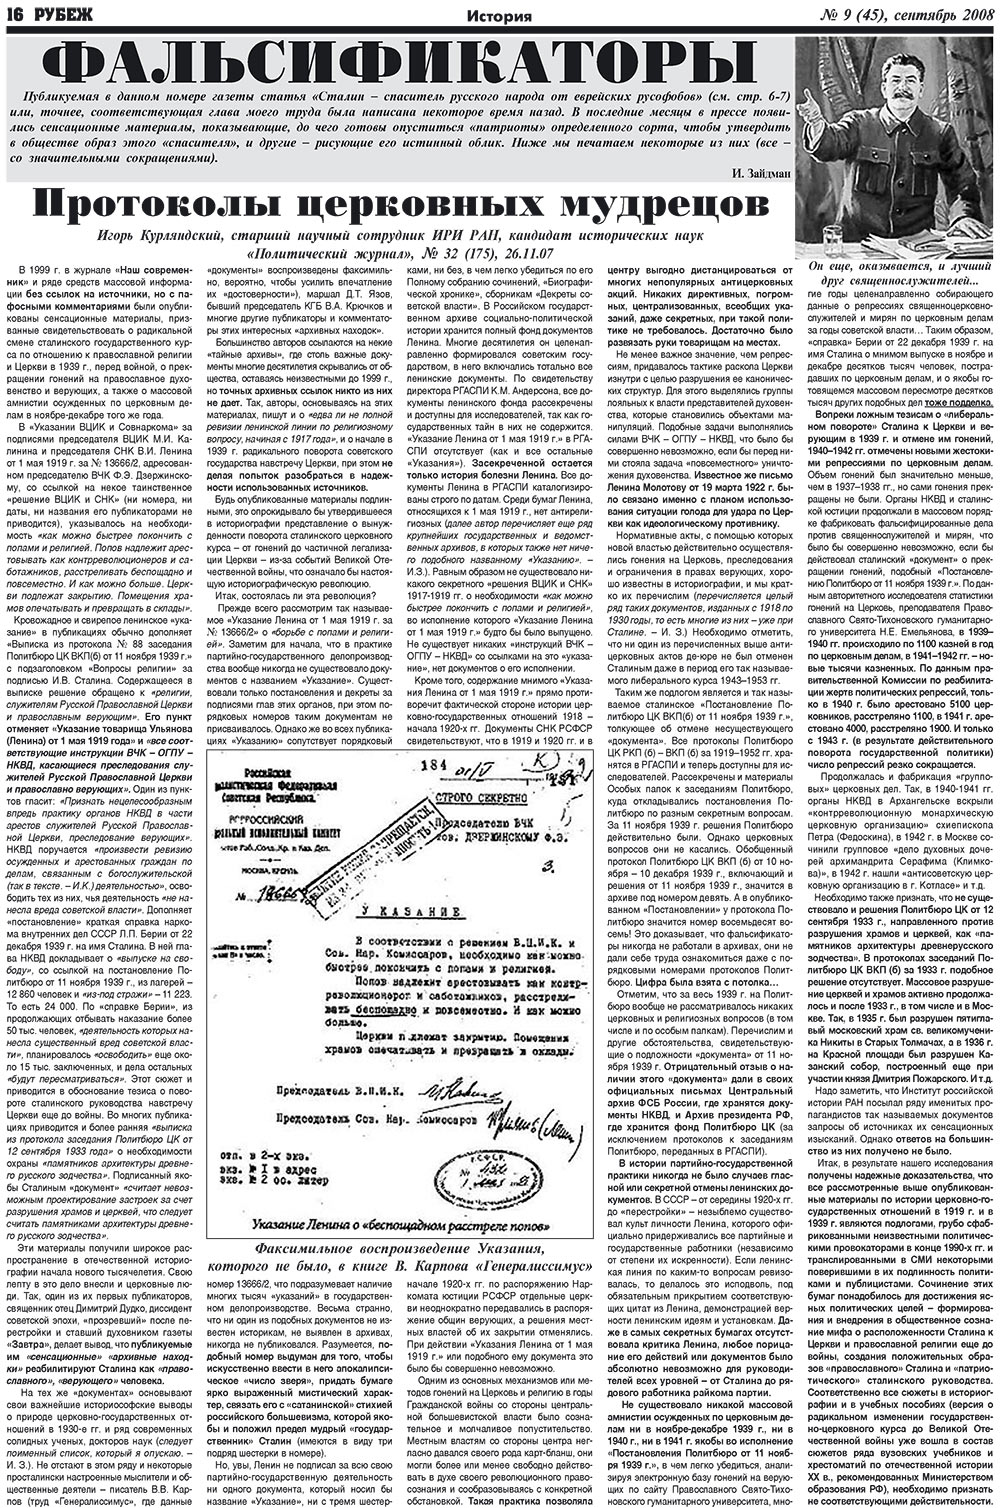 Рубеж, газета. 2008 №9 стр.16